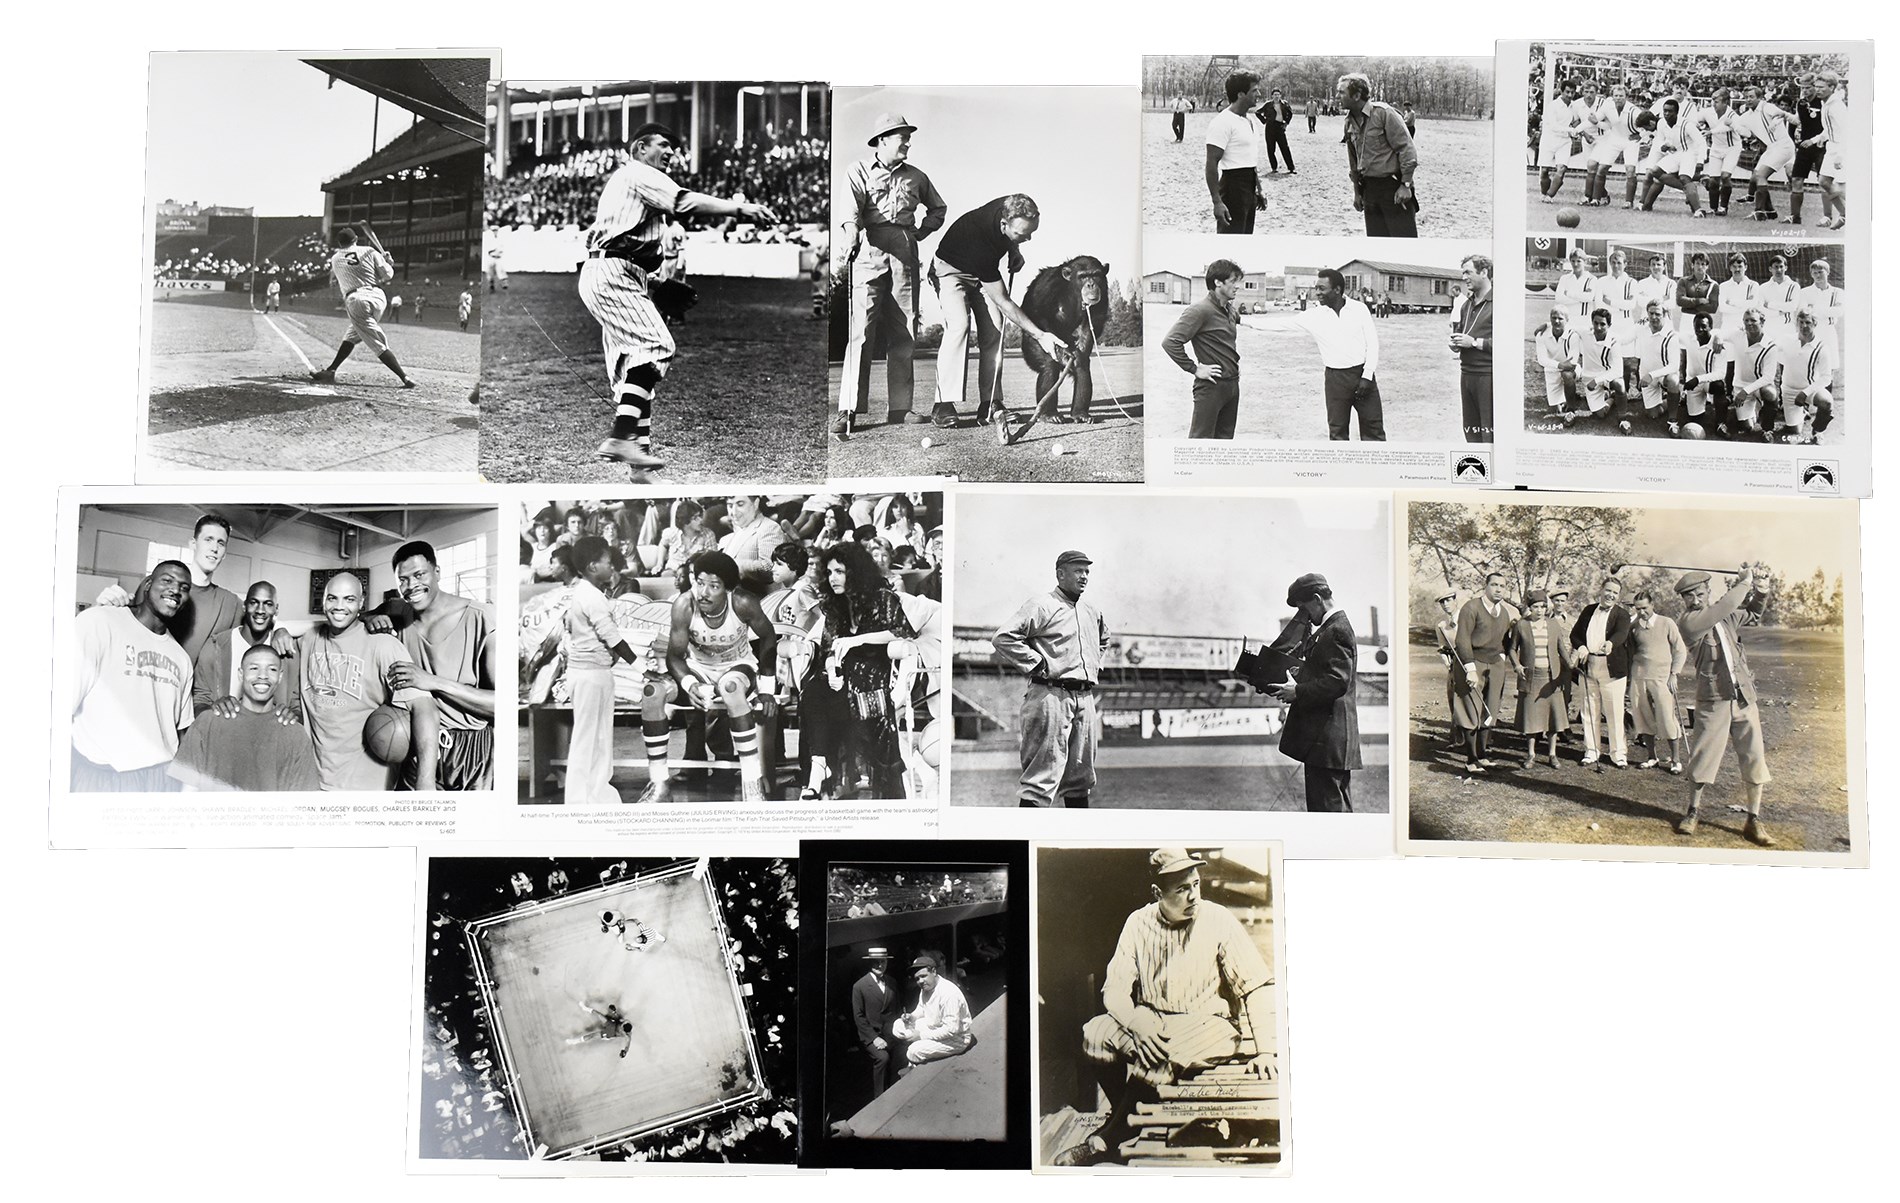 Vintage Sports Photographs - Multi Sport Photograph Collection w/Ruth & Mathewson (100+)